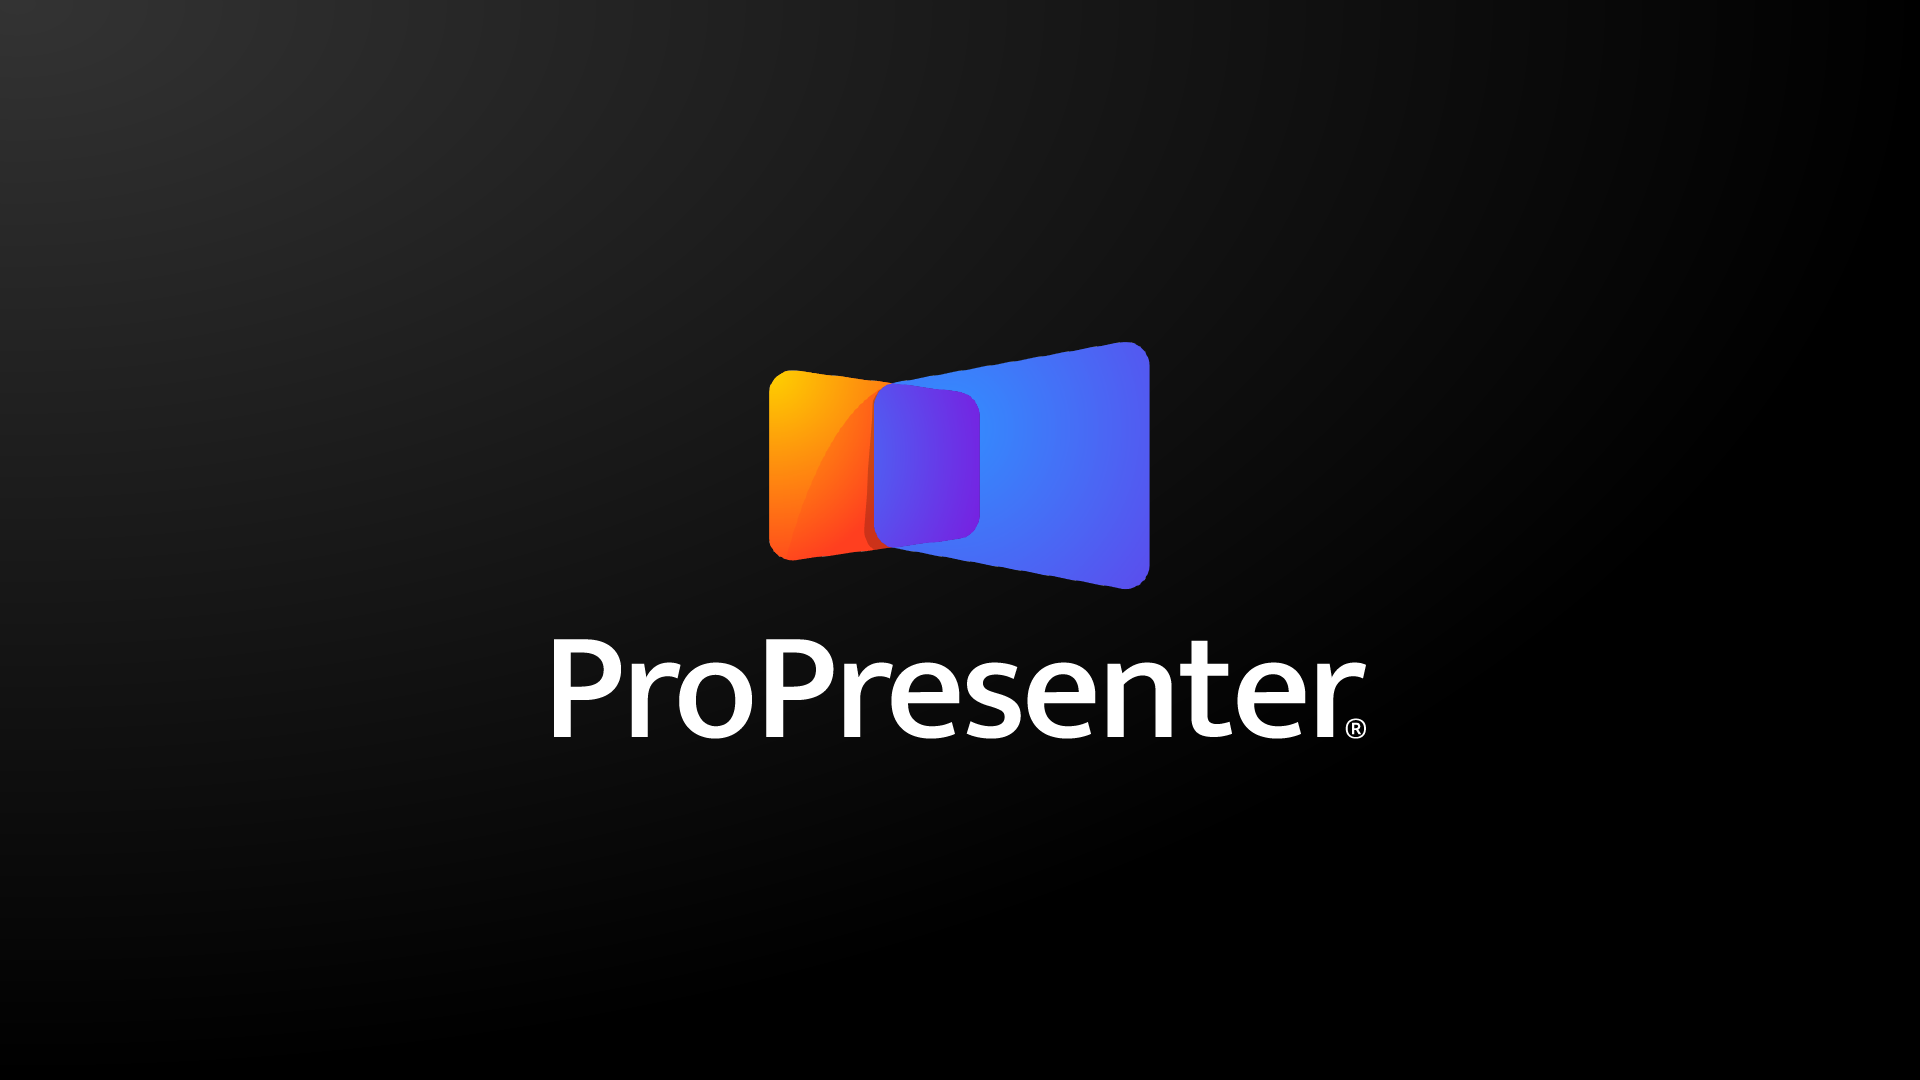 ProPresenter: A New Era of Live Presentation Management